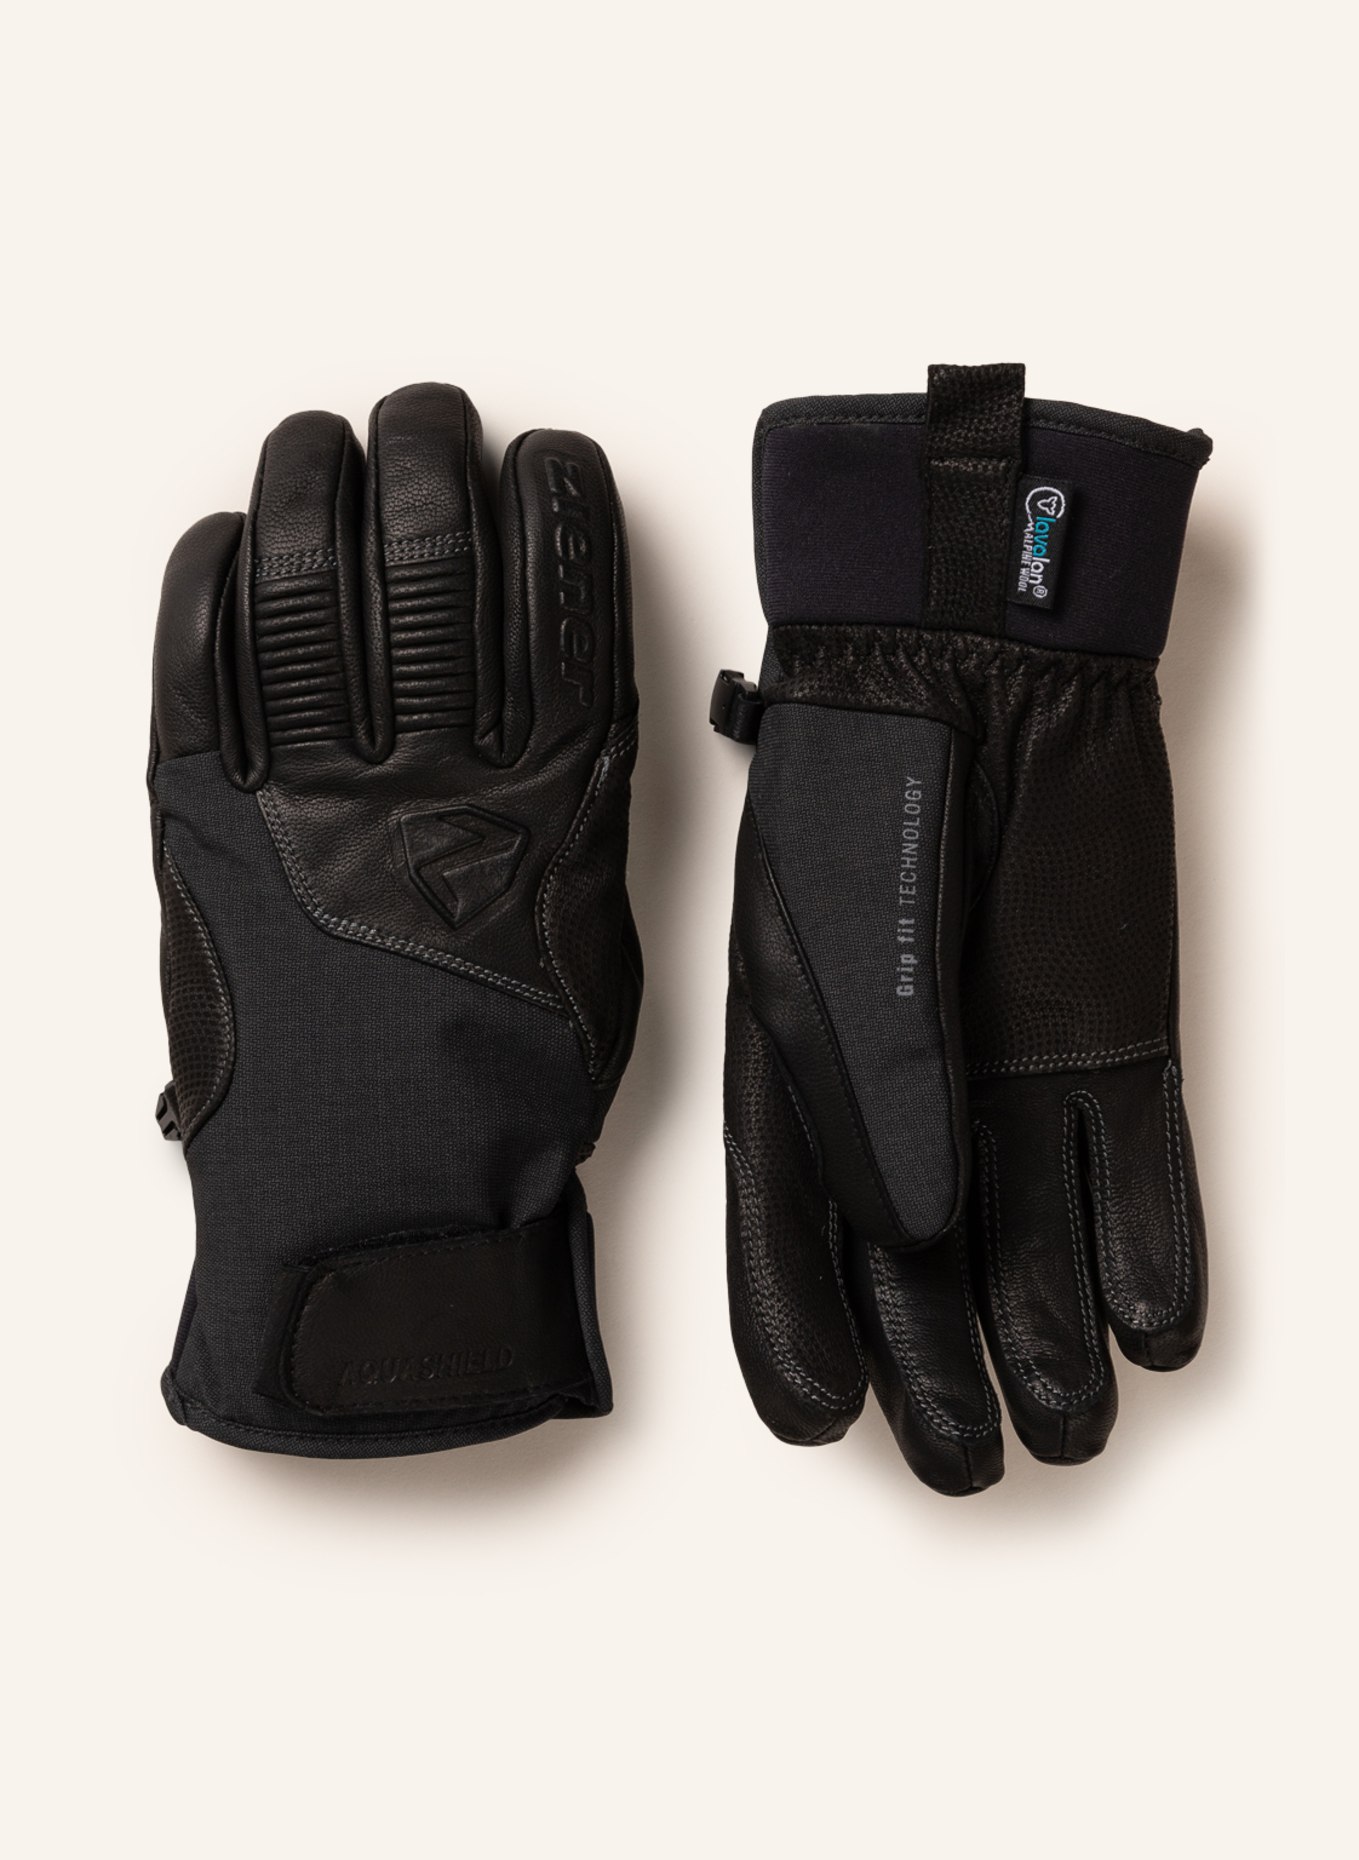 ziener Ski gloves GANZENBERG in black/ dark gray